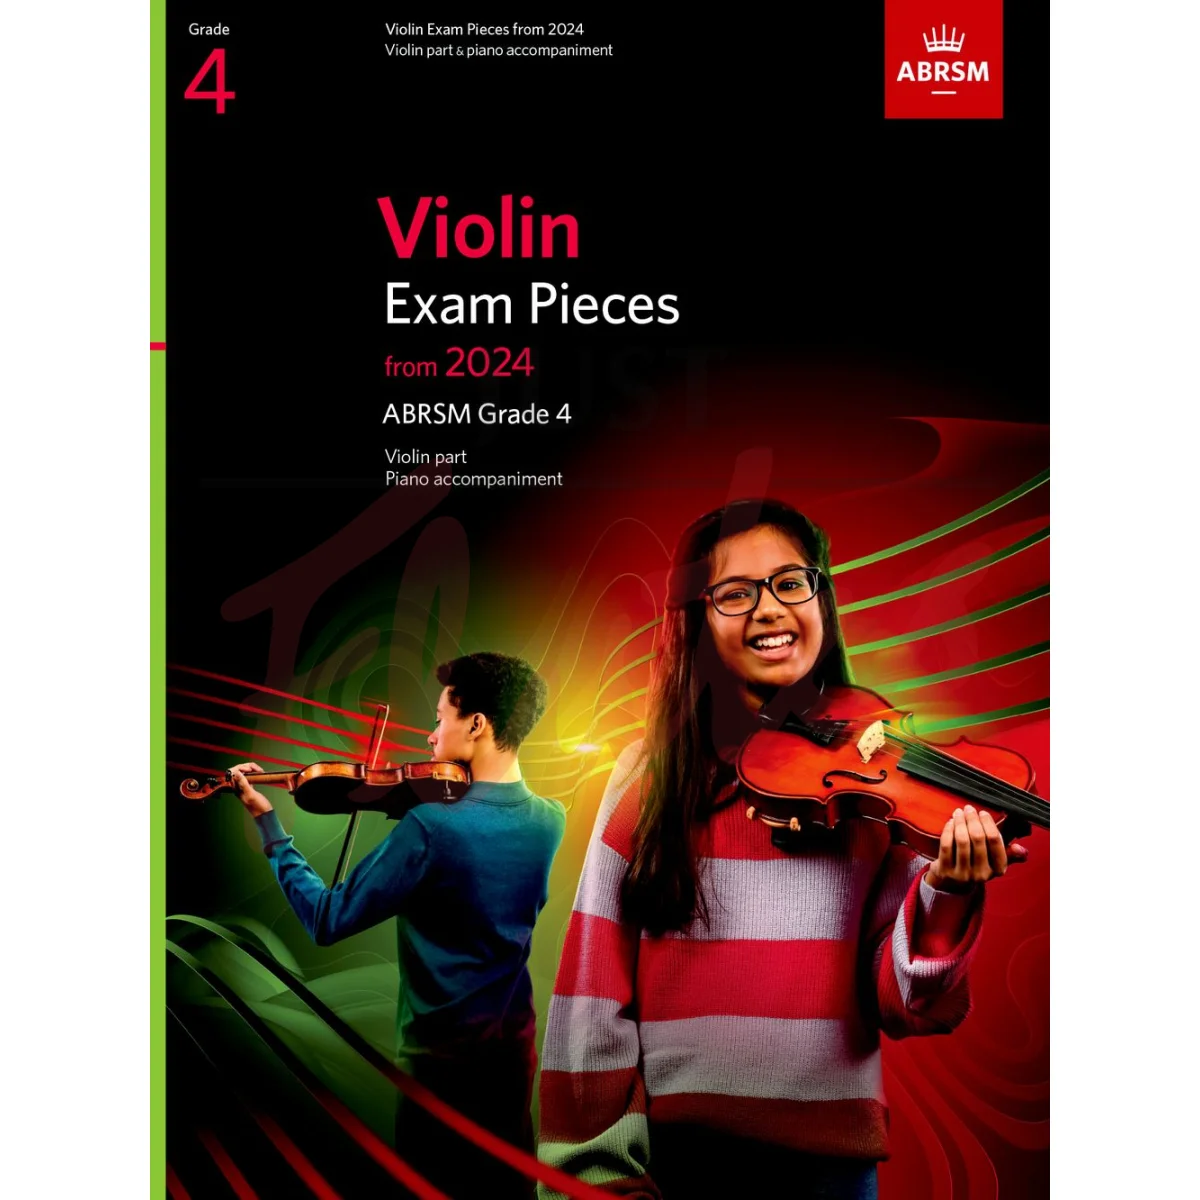 Violin Exam Pieces from 2024, Grade 4